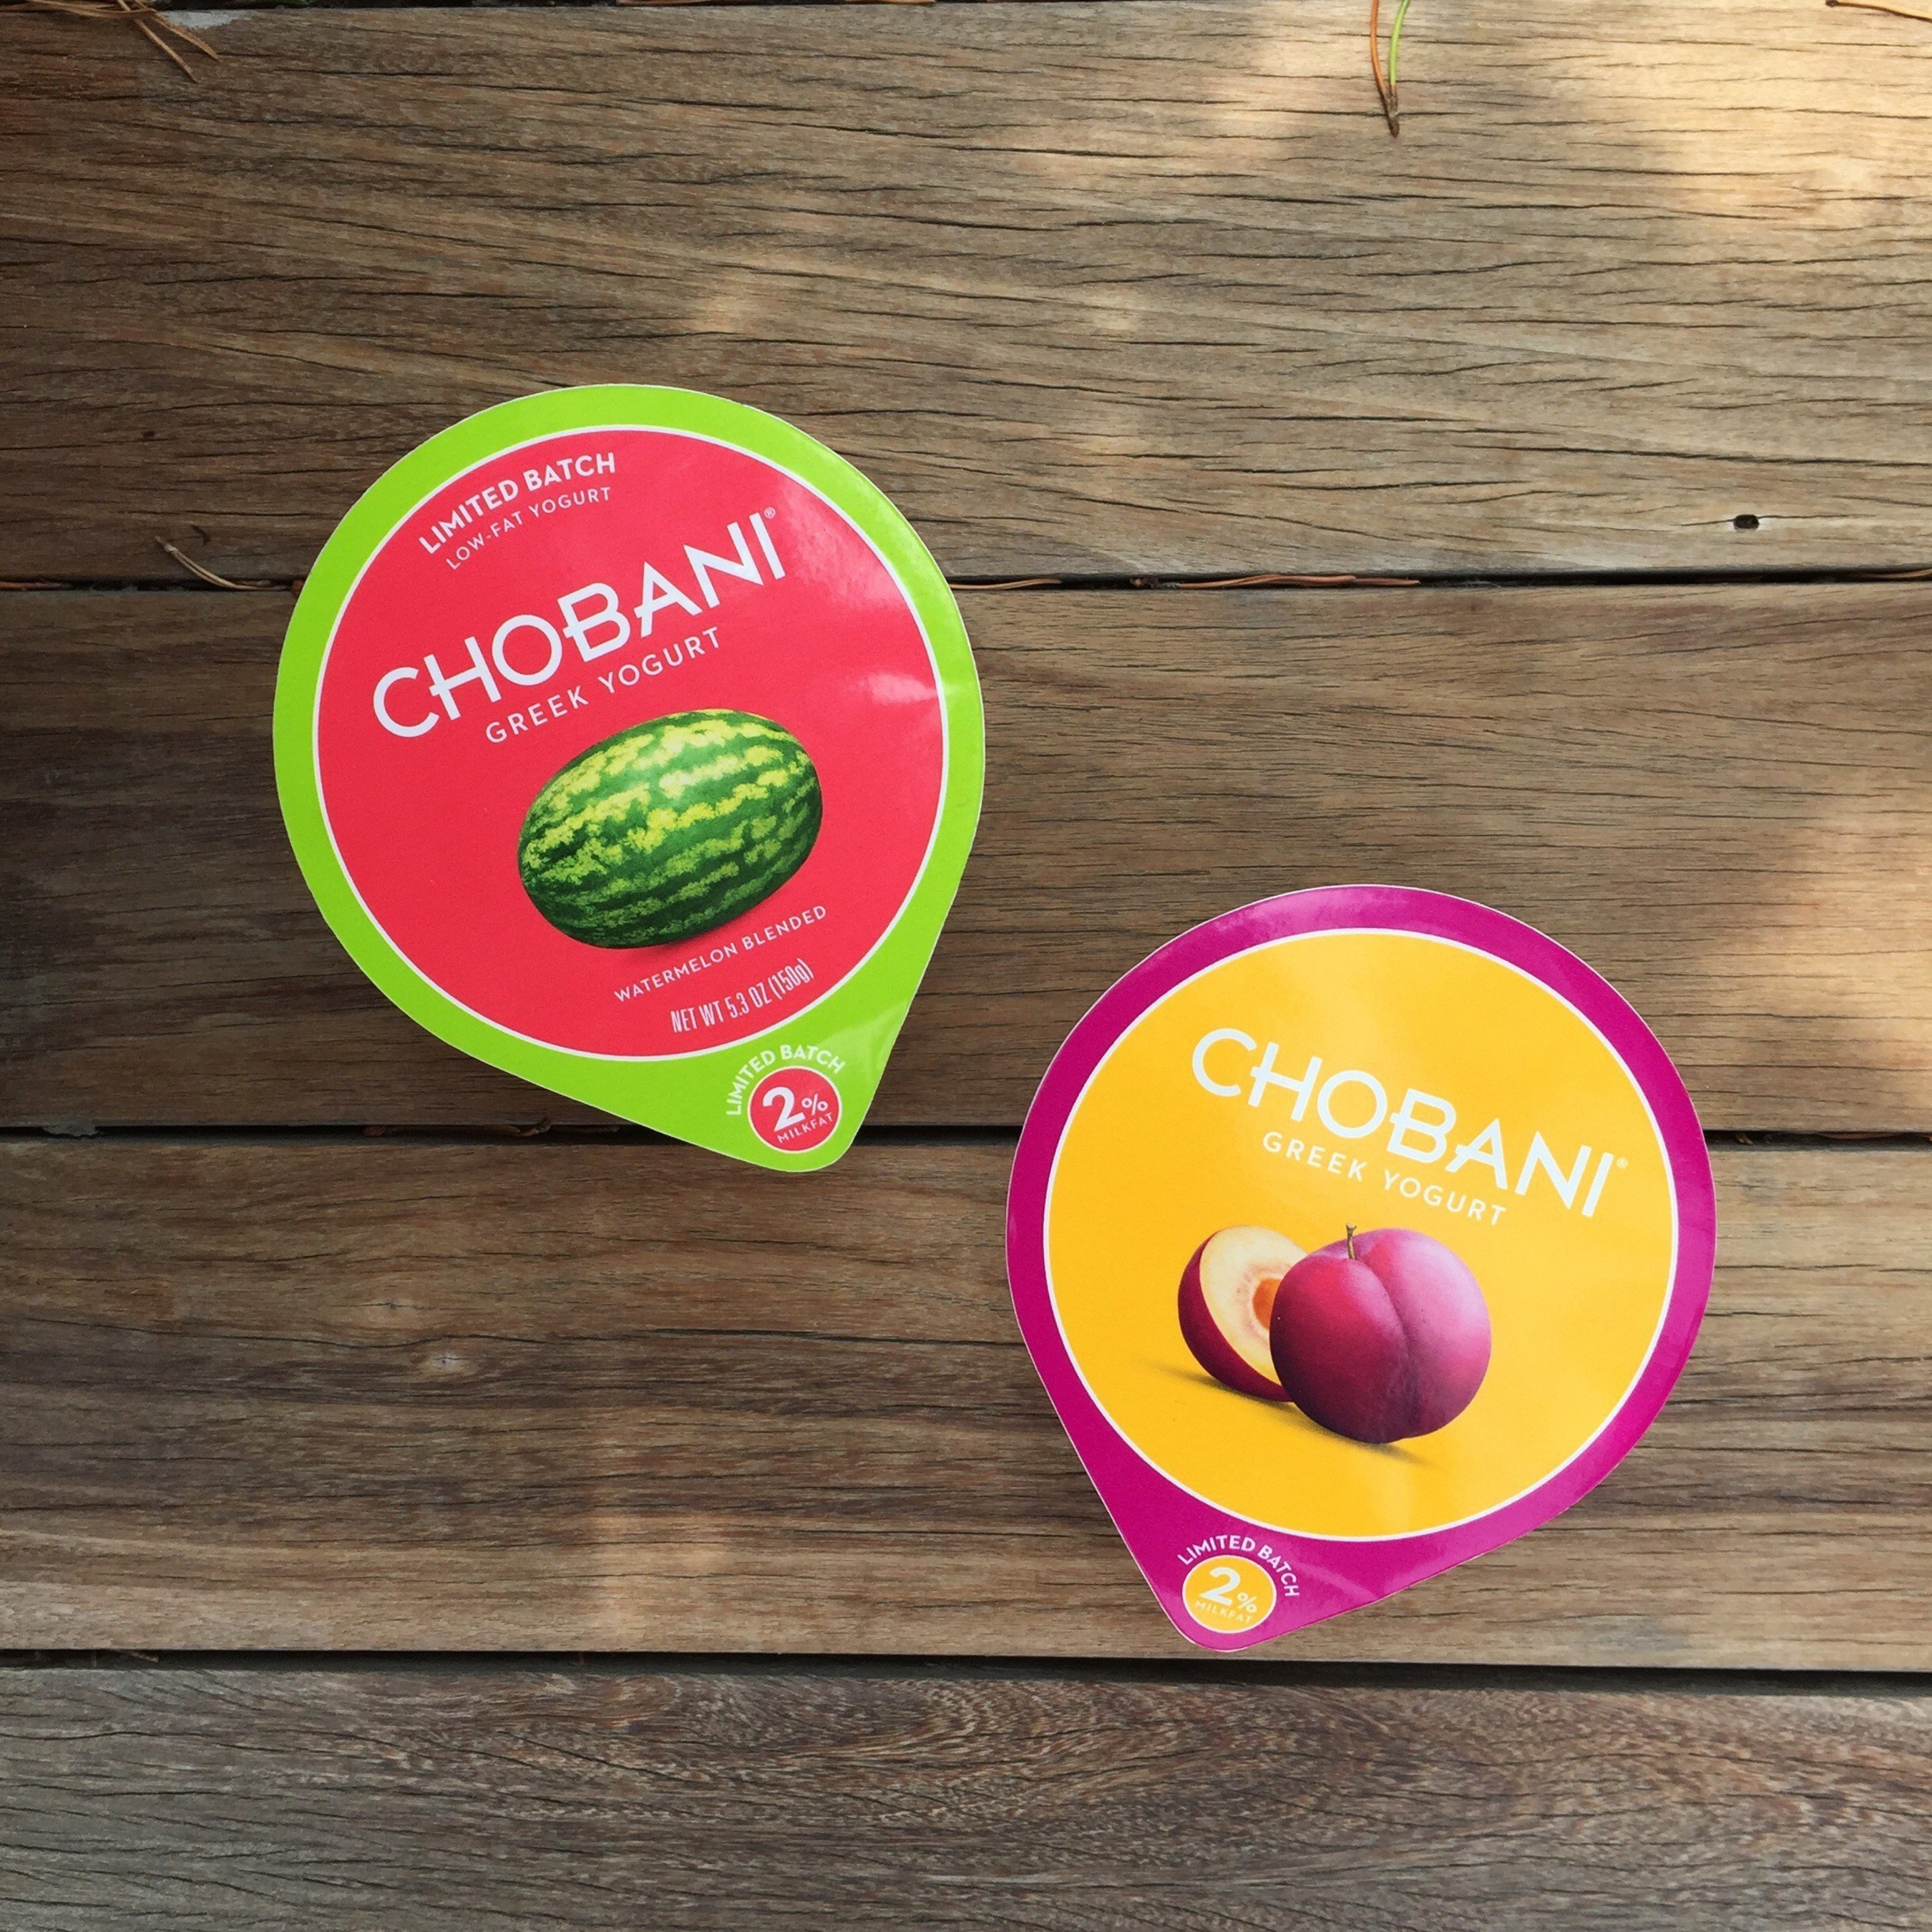 Chobani, America's No. 1-selling Greek Yogurt brand, is launching Limited Batch Plum and bringing back popular Chobani Watermelon, both available through August.